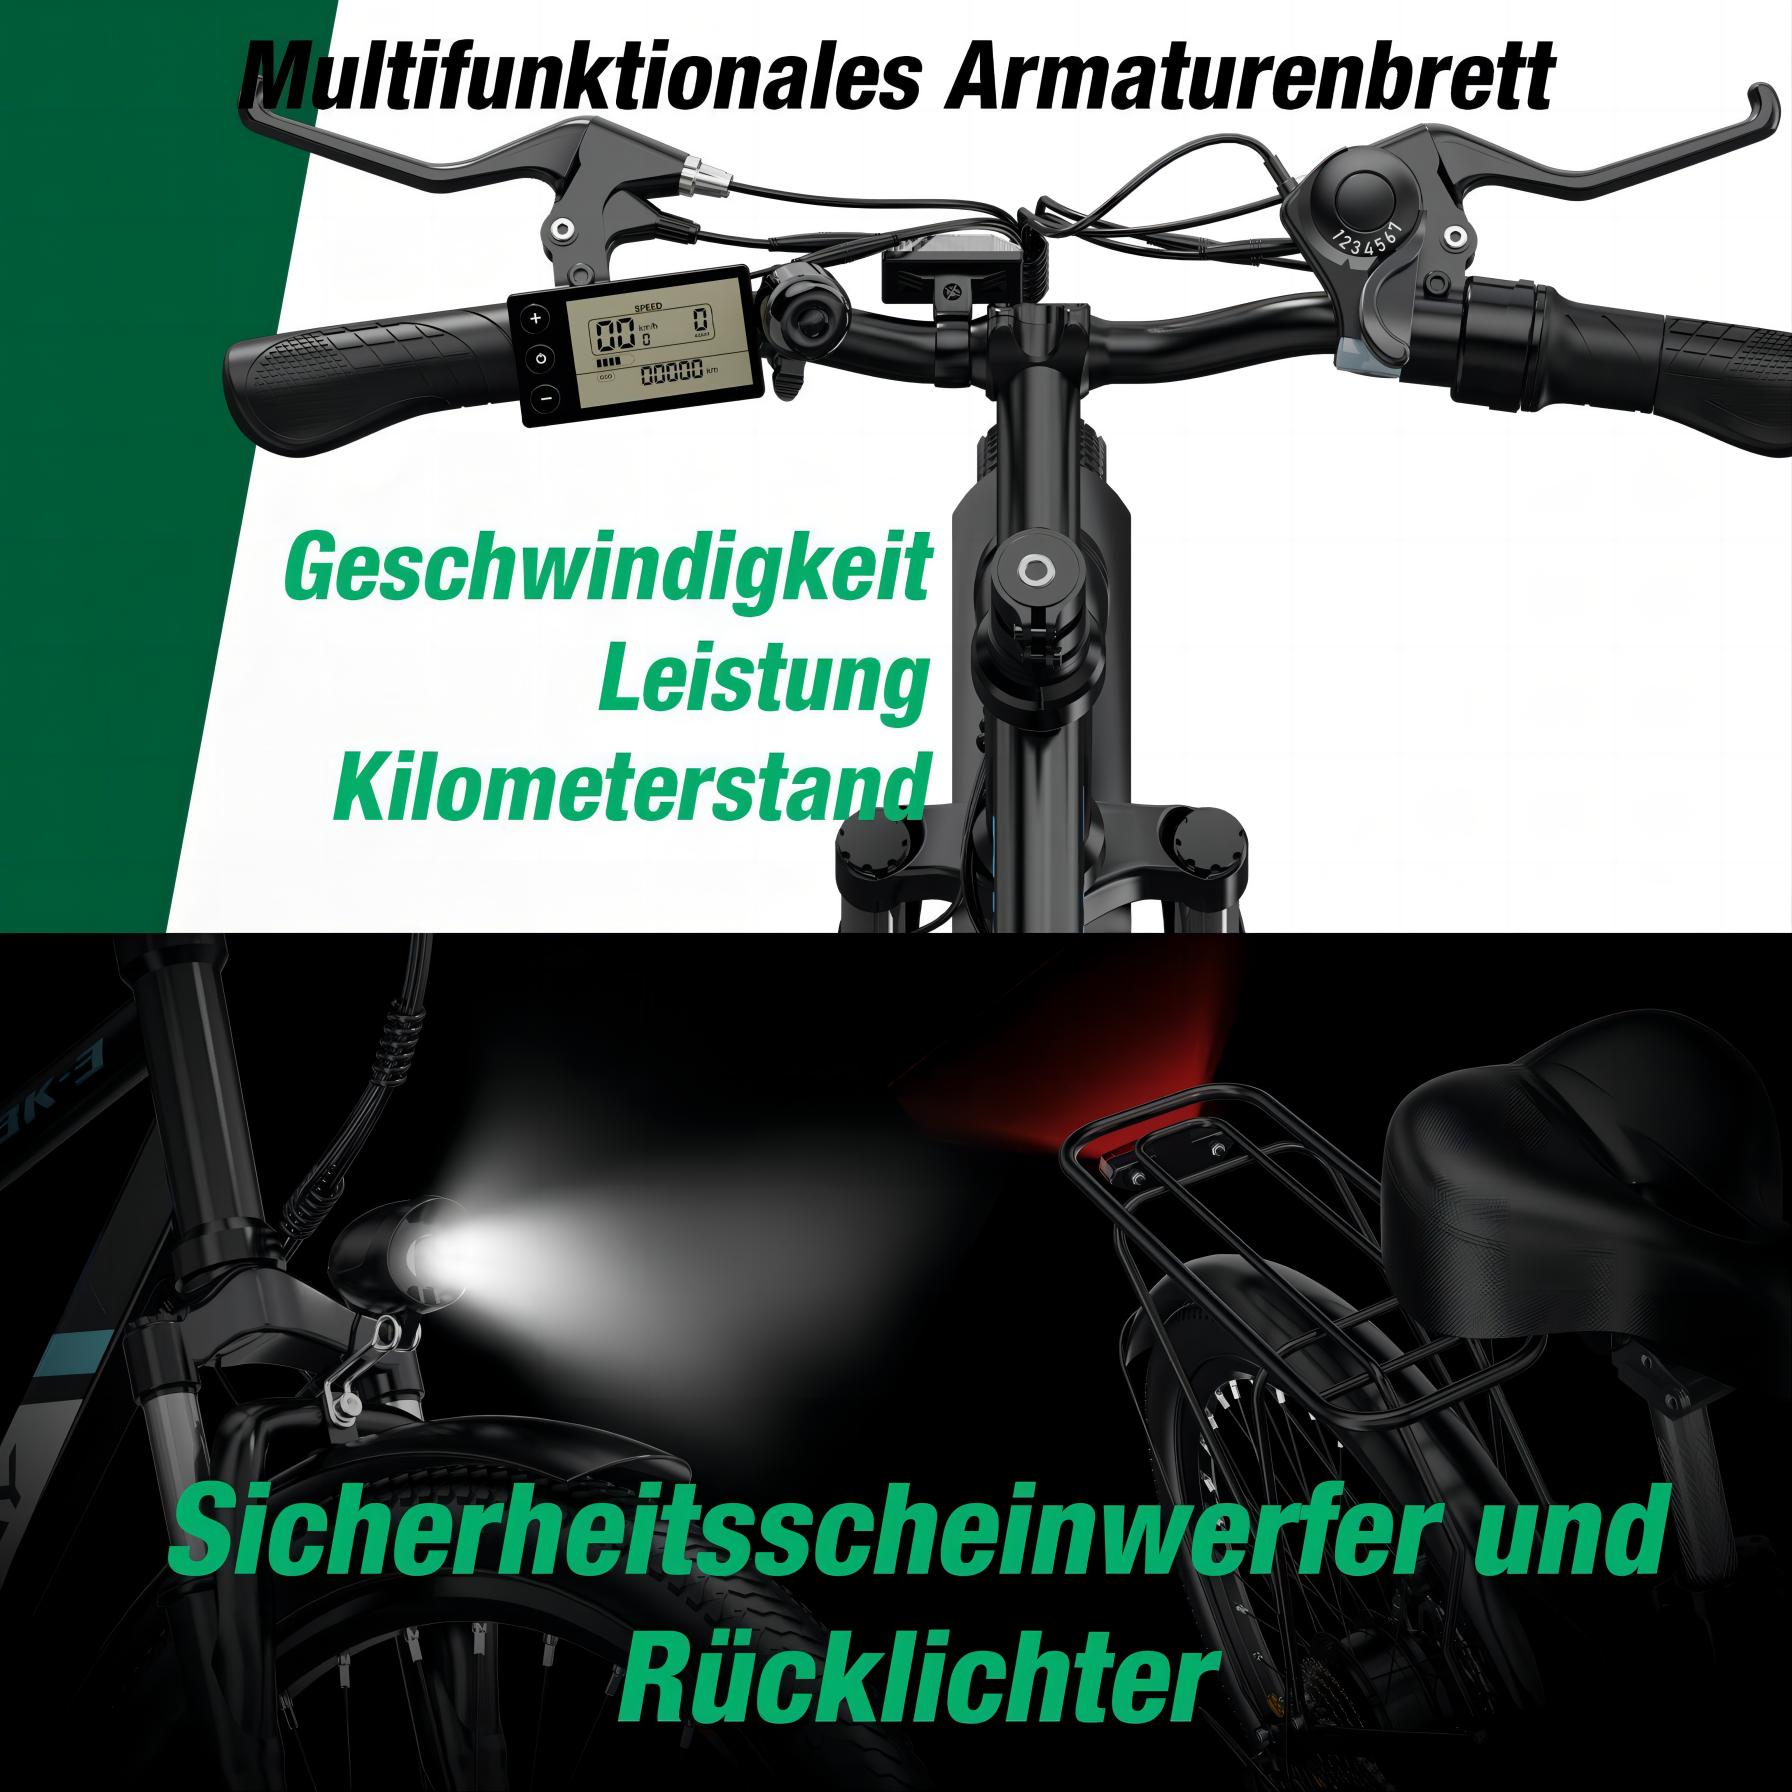 410,4, HITWAY Heckmotor, Mountainbike Elektrofahrrad BK3S 26 E-Bike, 7 Zoll, Unisex-Rad, Gang, Schwarz-blau) (Laufradgröße: